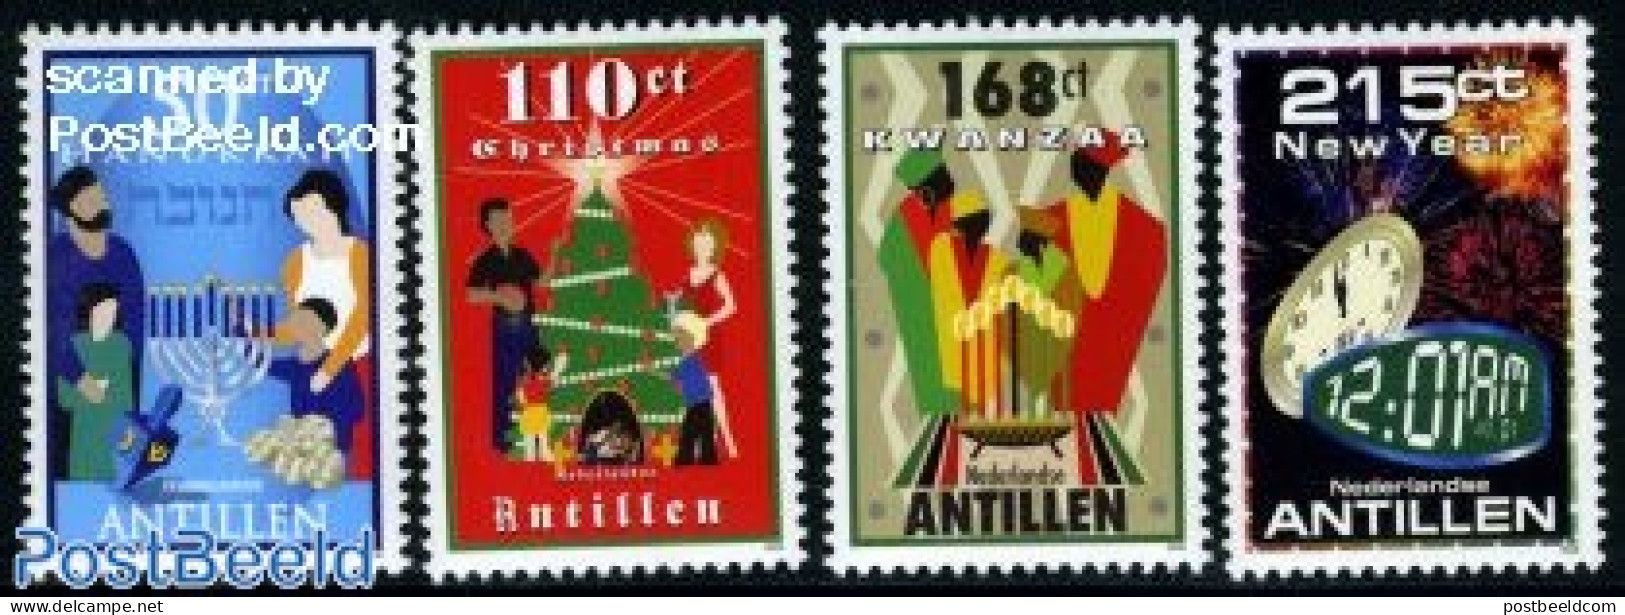 Netherlands Antilles 2009 December Stamps 4v, Mint NH, Religion - Various - Christmas - Judaica - New Year - Art - Clo.. - Navidad